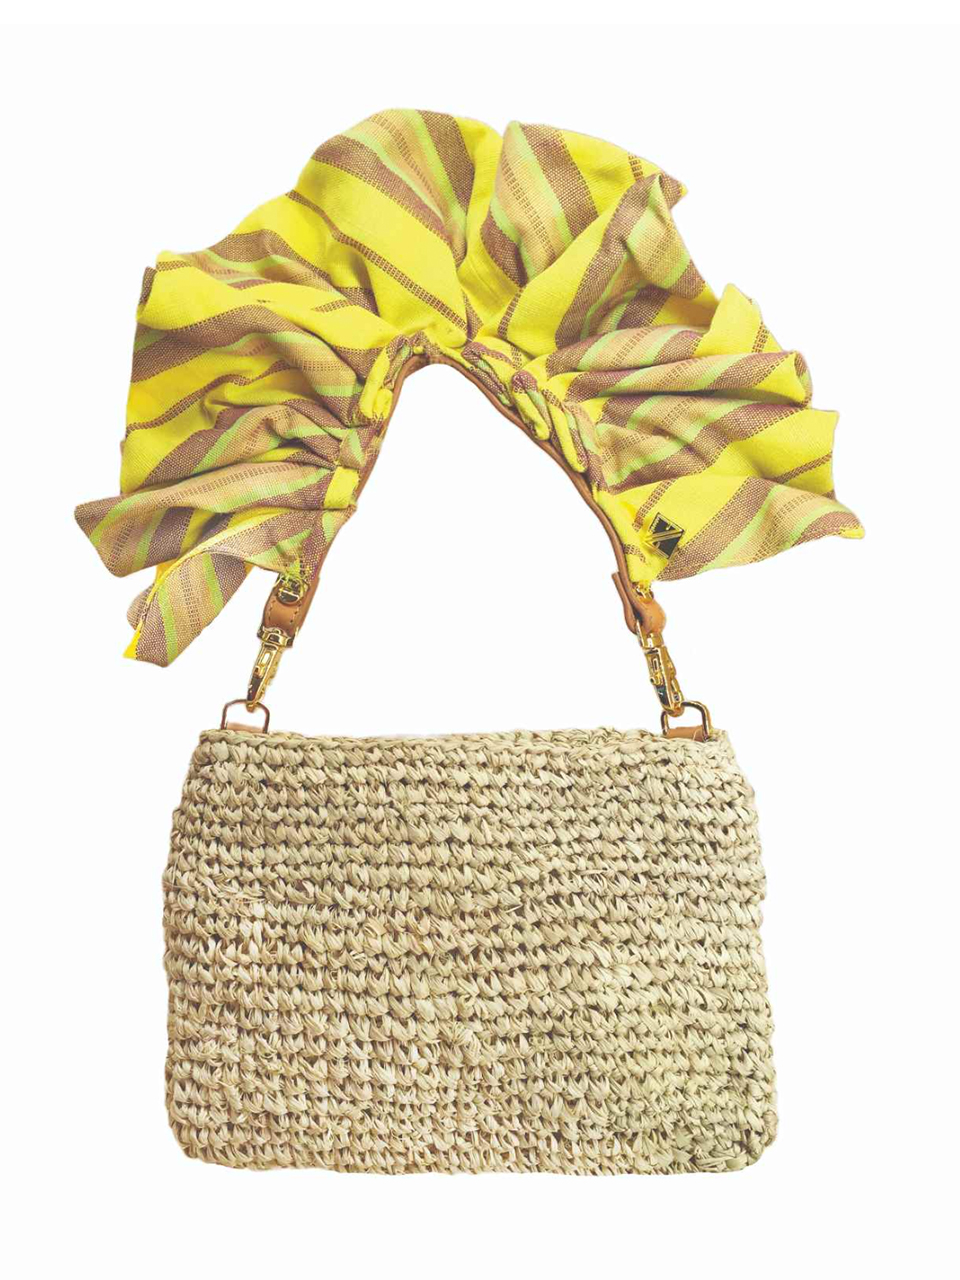 ARANAZ Bow Mini Bag in Natural/ Yellow Product Shot 